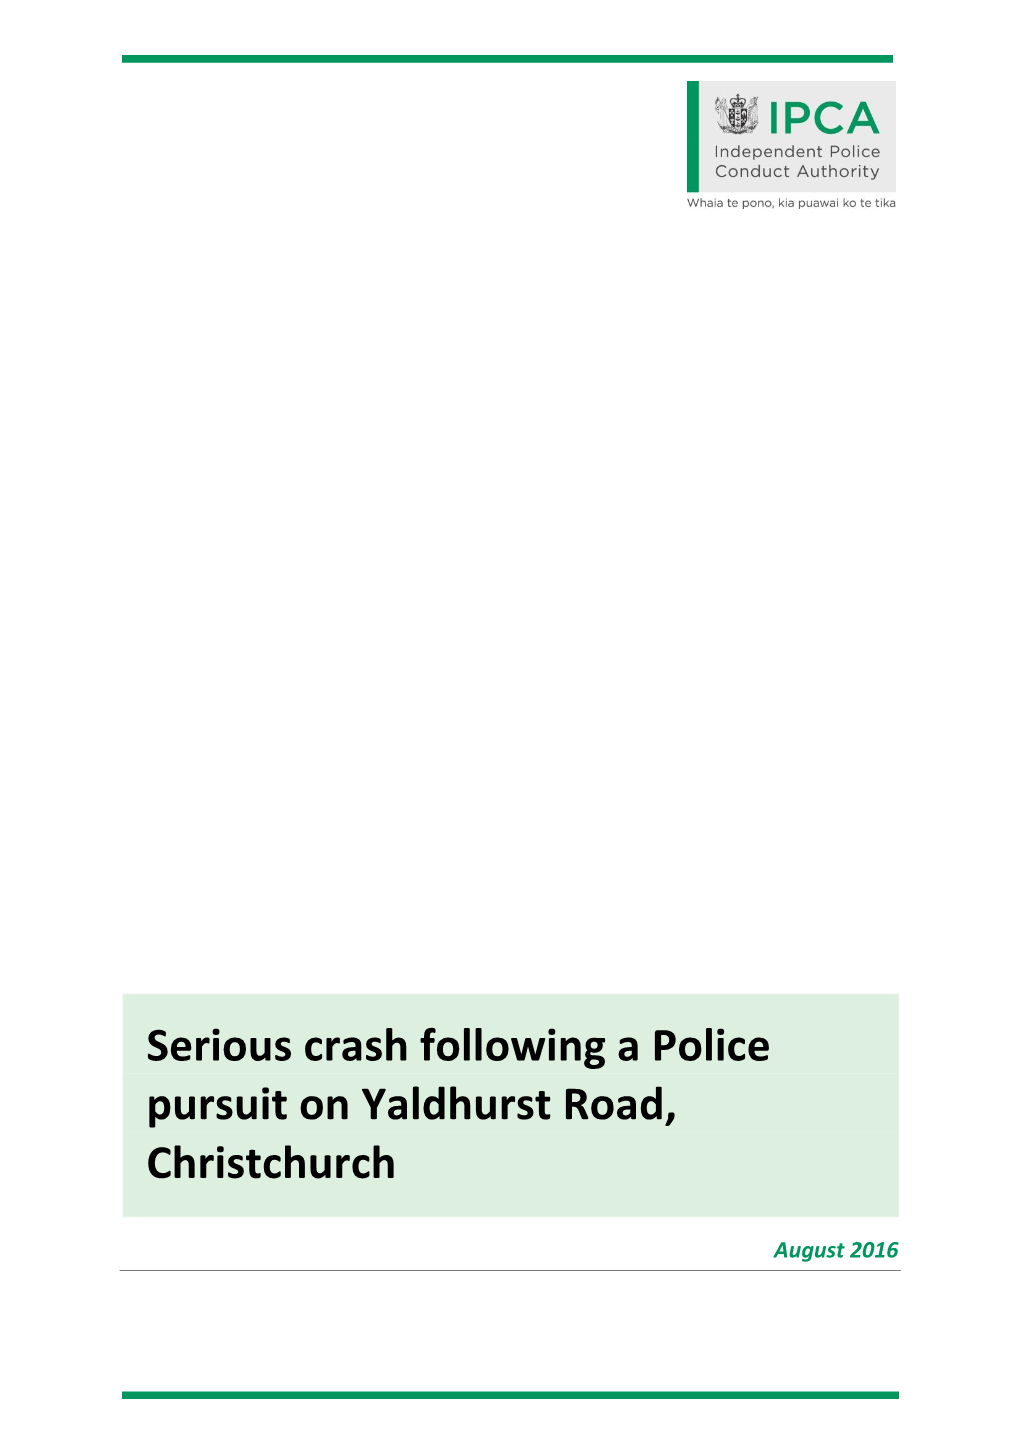 Serious Crash Following a Police Pursuit on Yaldhurst Road, Christchurch